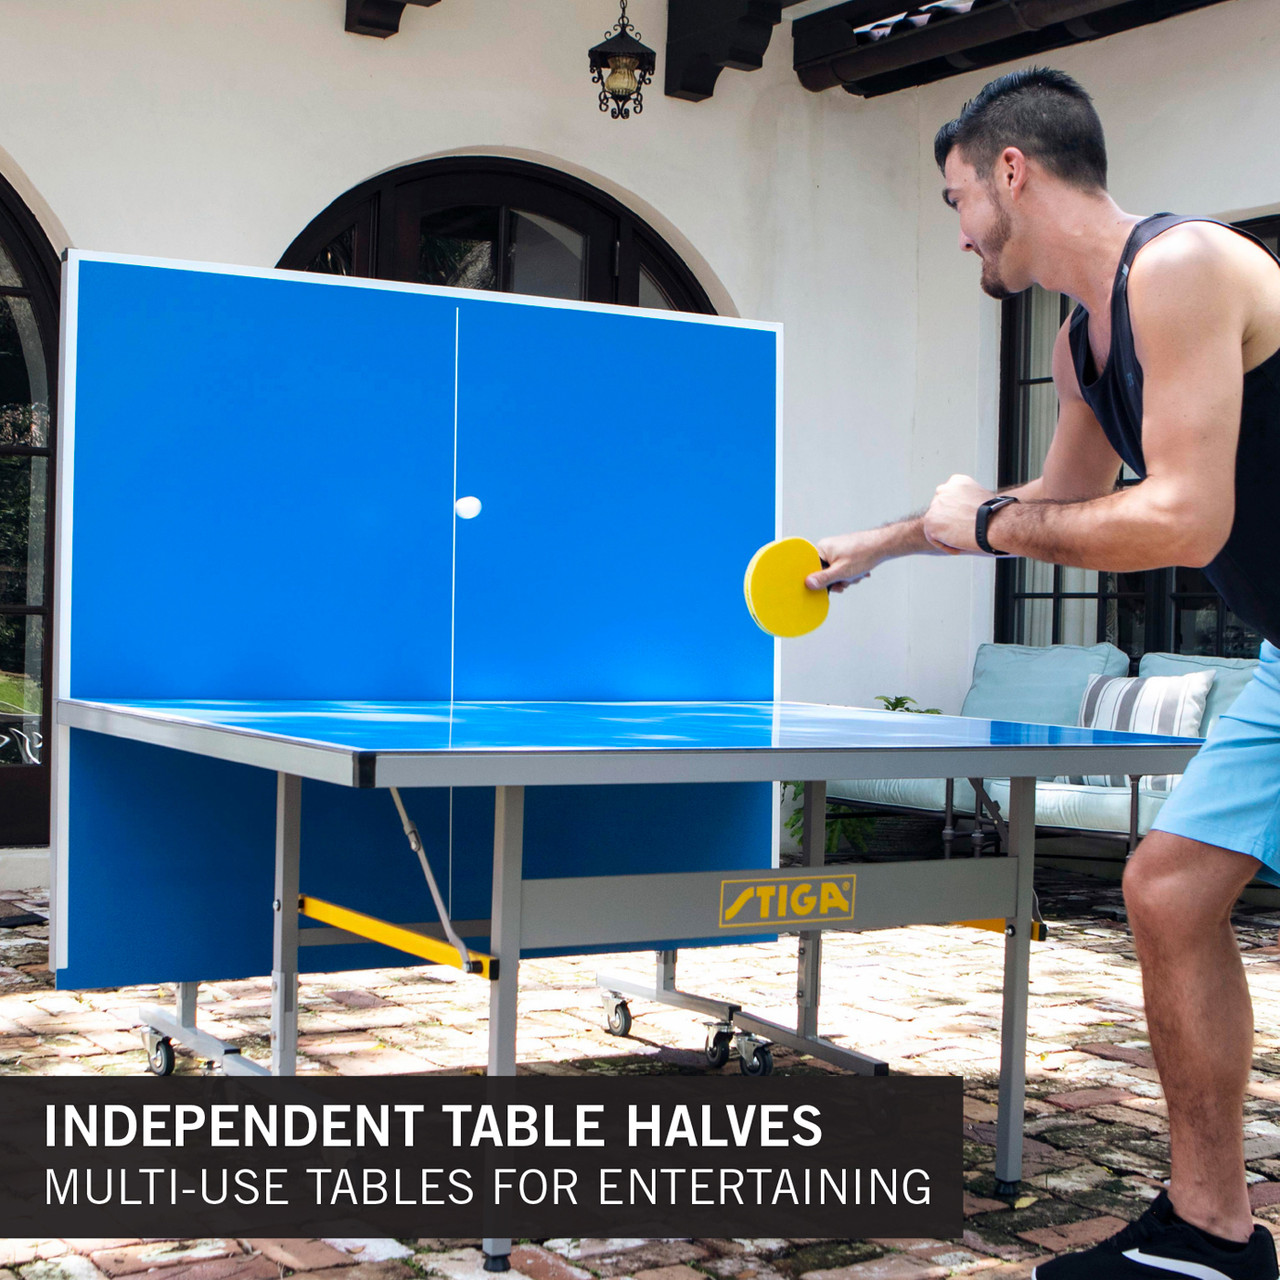 Outdoor Ping Pong Tables, STIGA